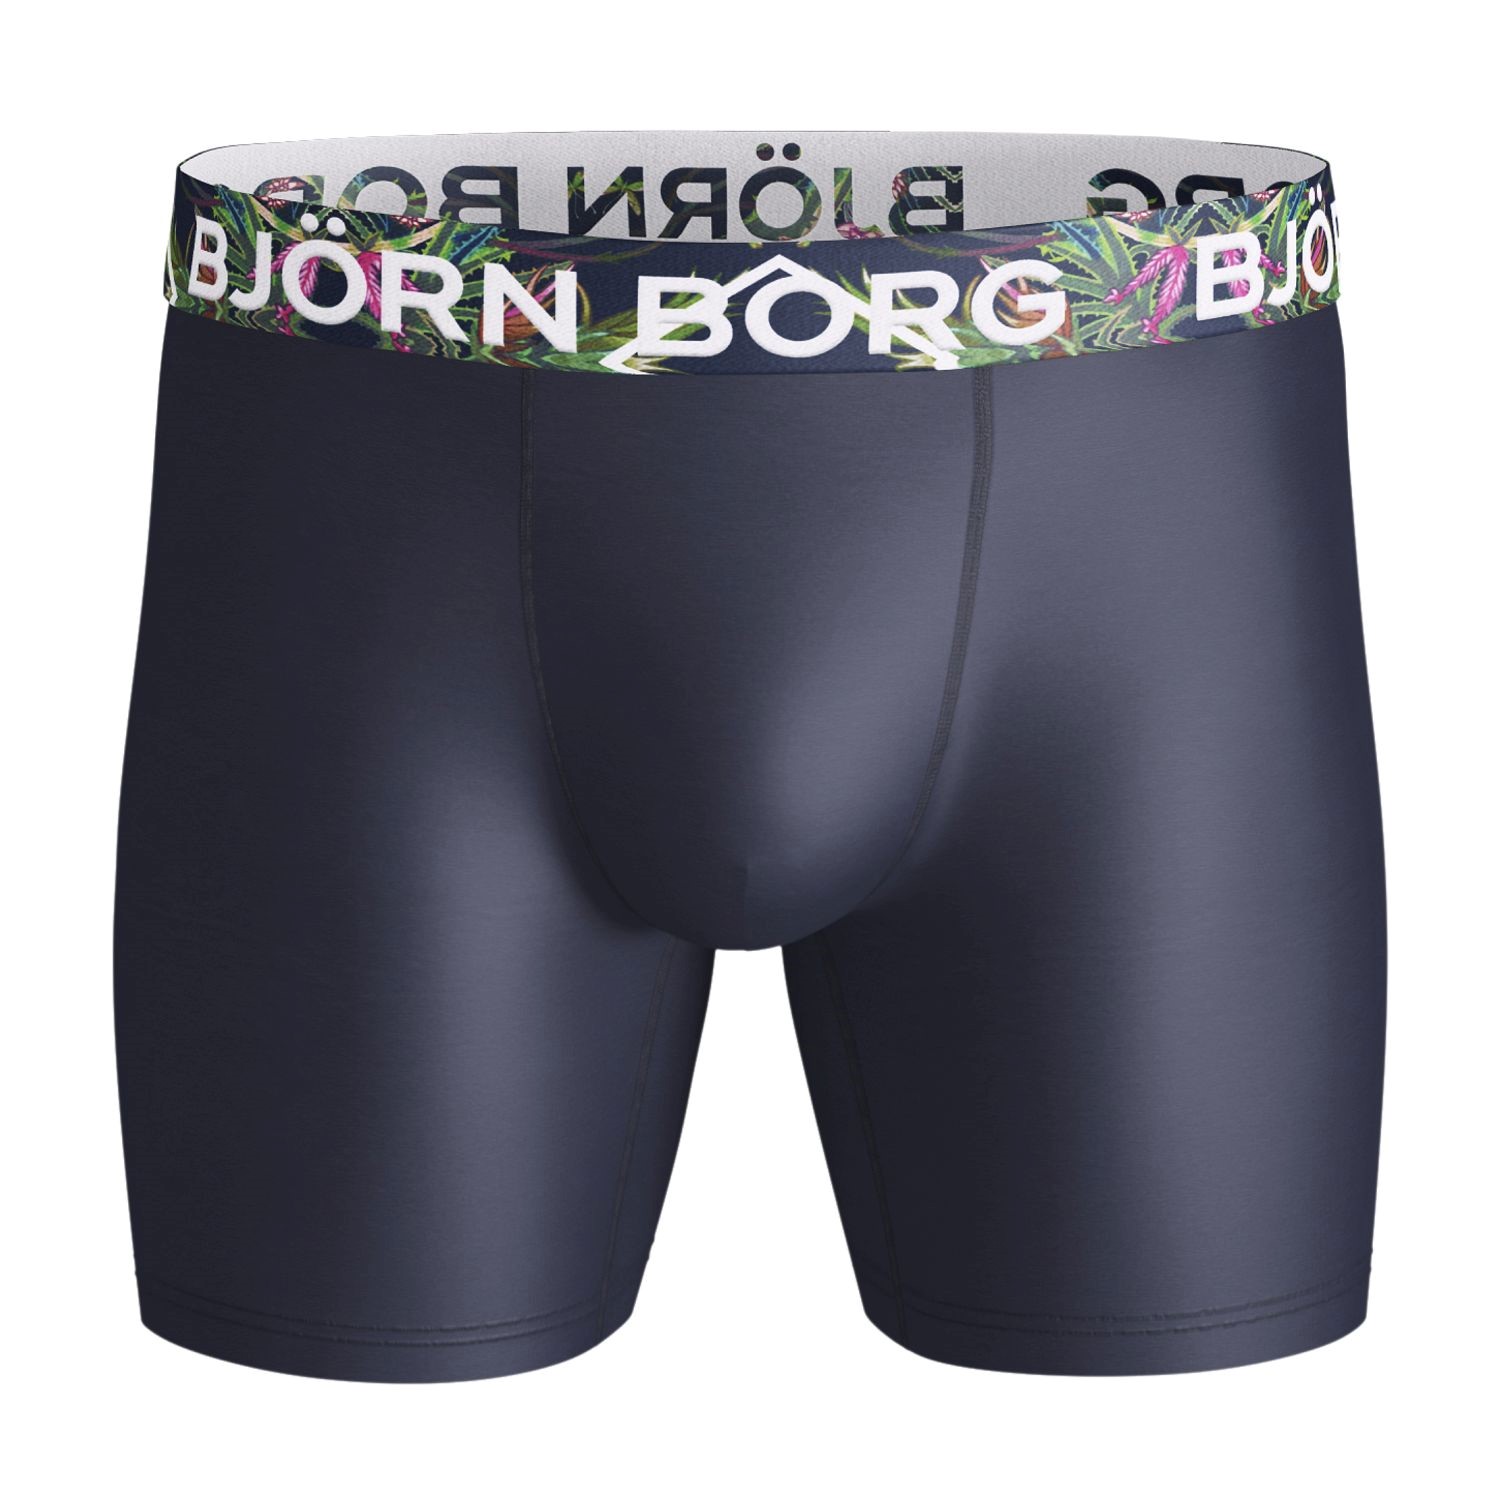 Björn Borg Performance Solids Shorts 